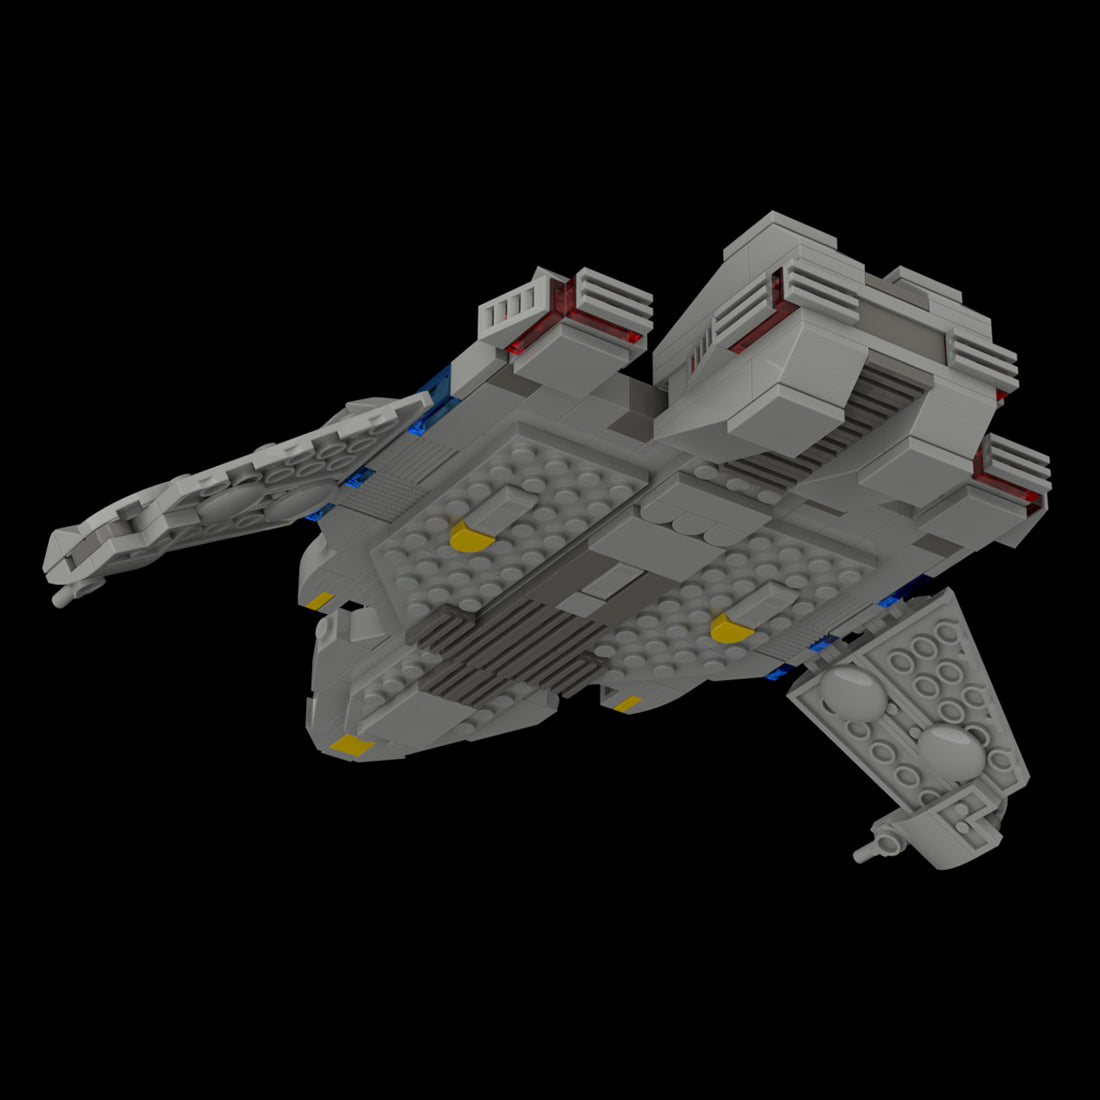 MOC-114838 Maquis Raider Space Warship Building Blocks